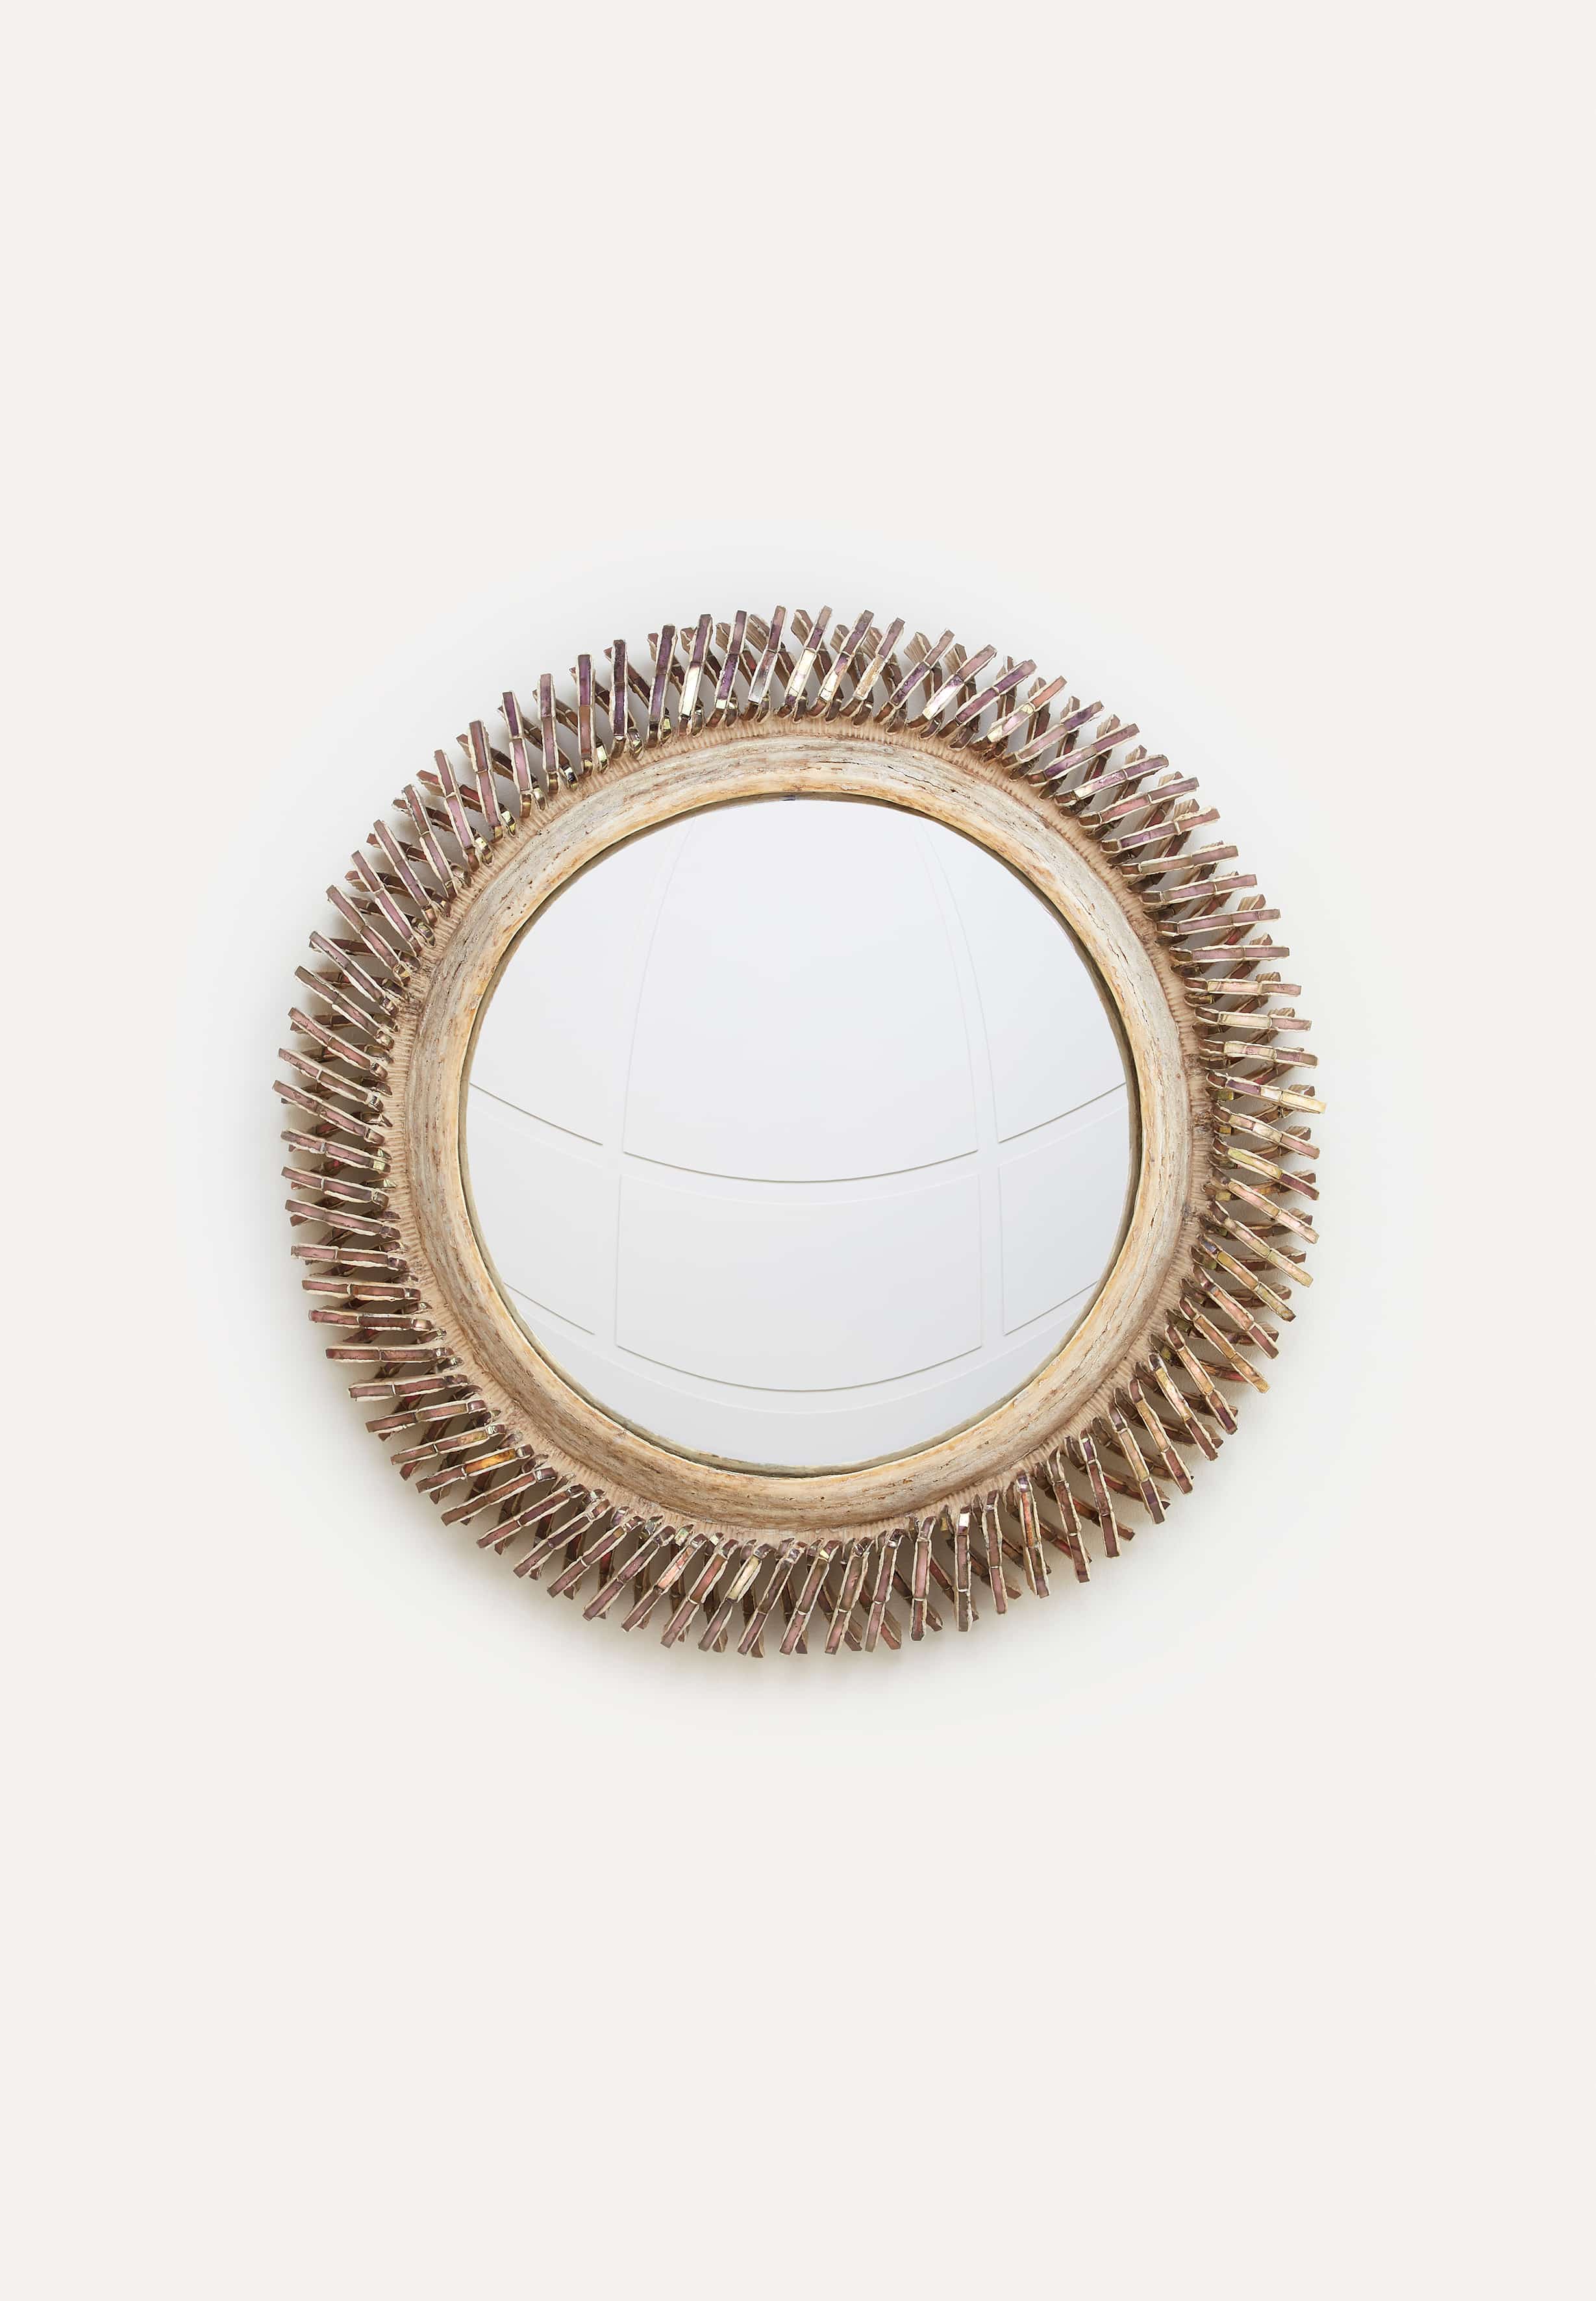 Line Vautrin, “Boudoir” mirror, vue 01